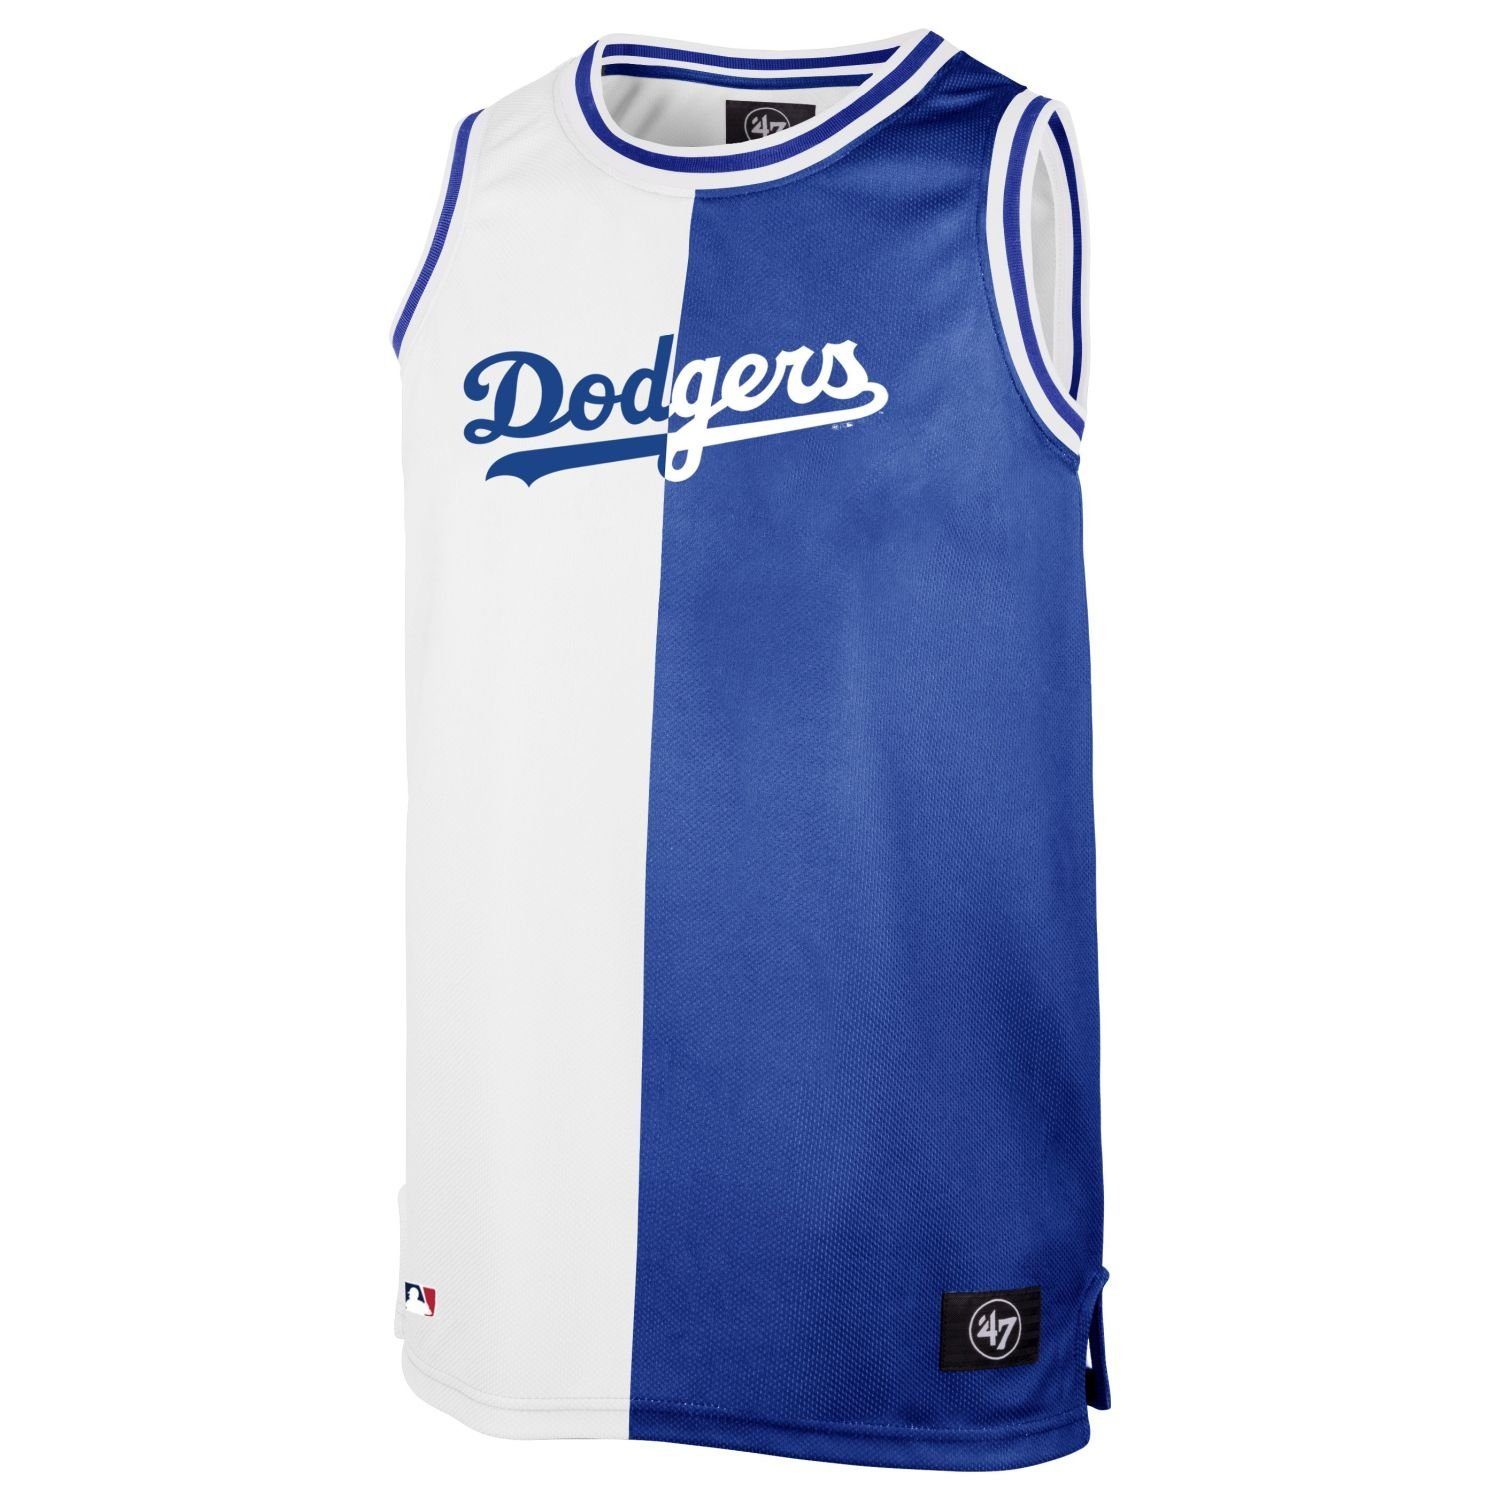 Los '47 Angeles Muskelshirt Dodgers SPLIT Brand